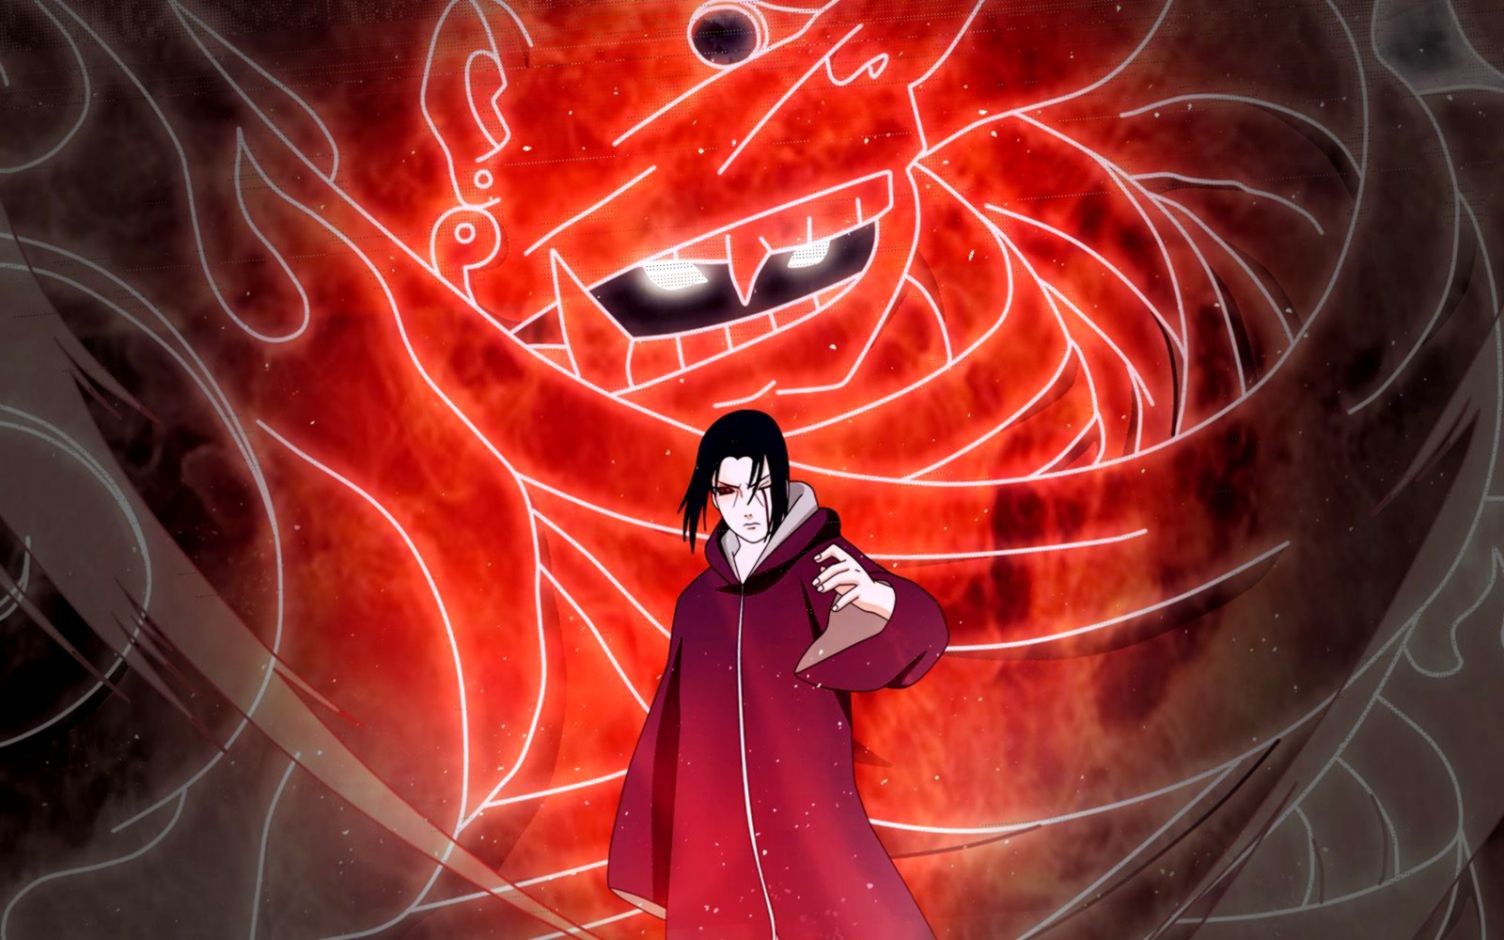 susanoo wallpaper,red,cg artwork,fictional character,anime,graphic design